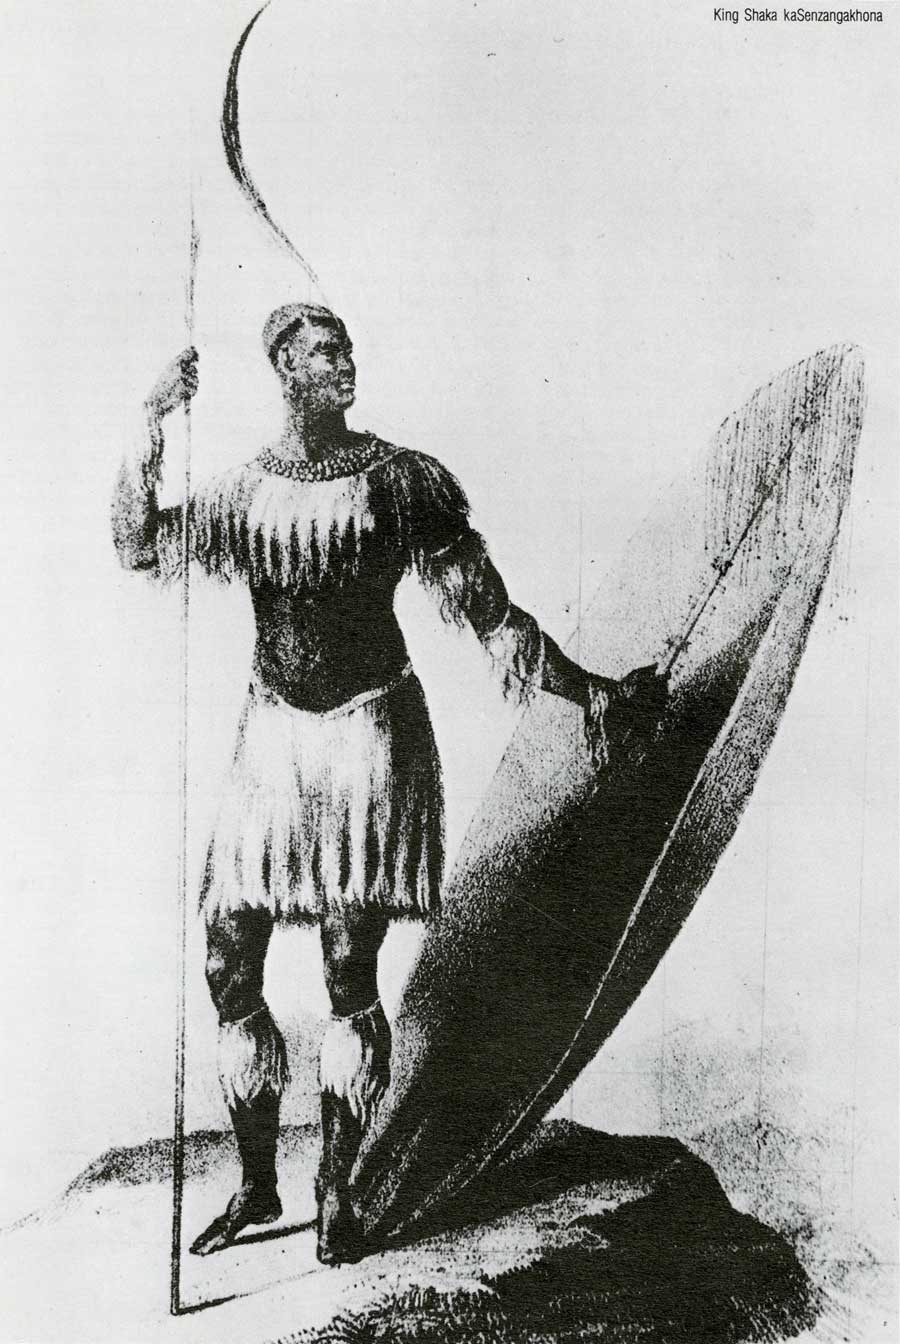 Image of Shaka Zulu from Charles Ballard, The House of Shaka: the Zulu Monarchy Illustrated